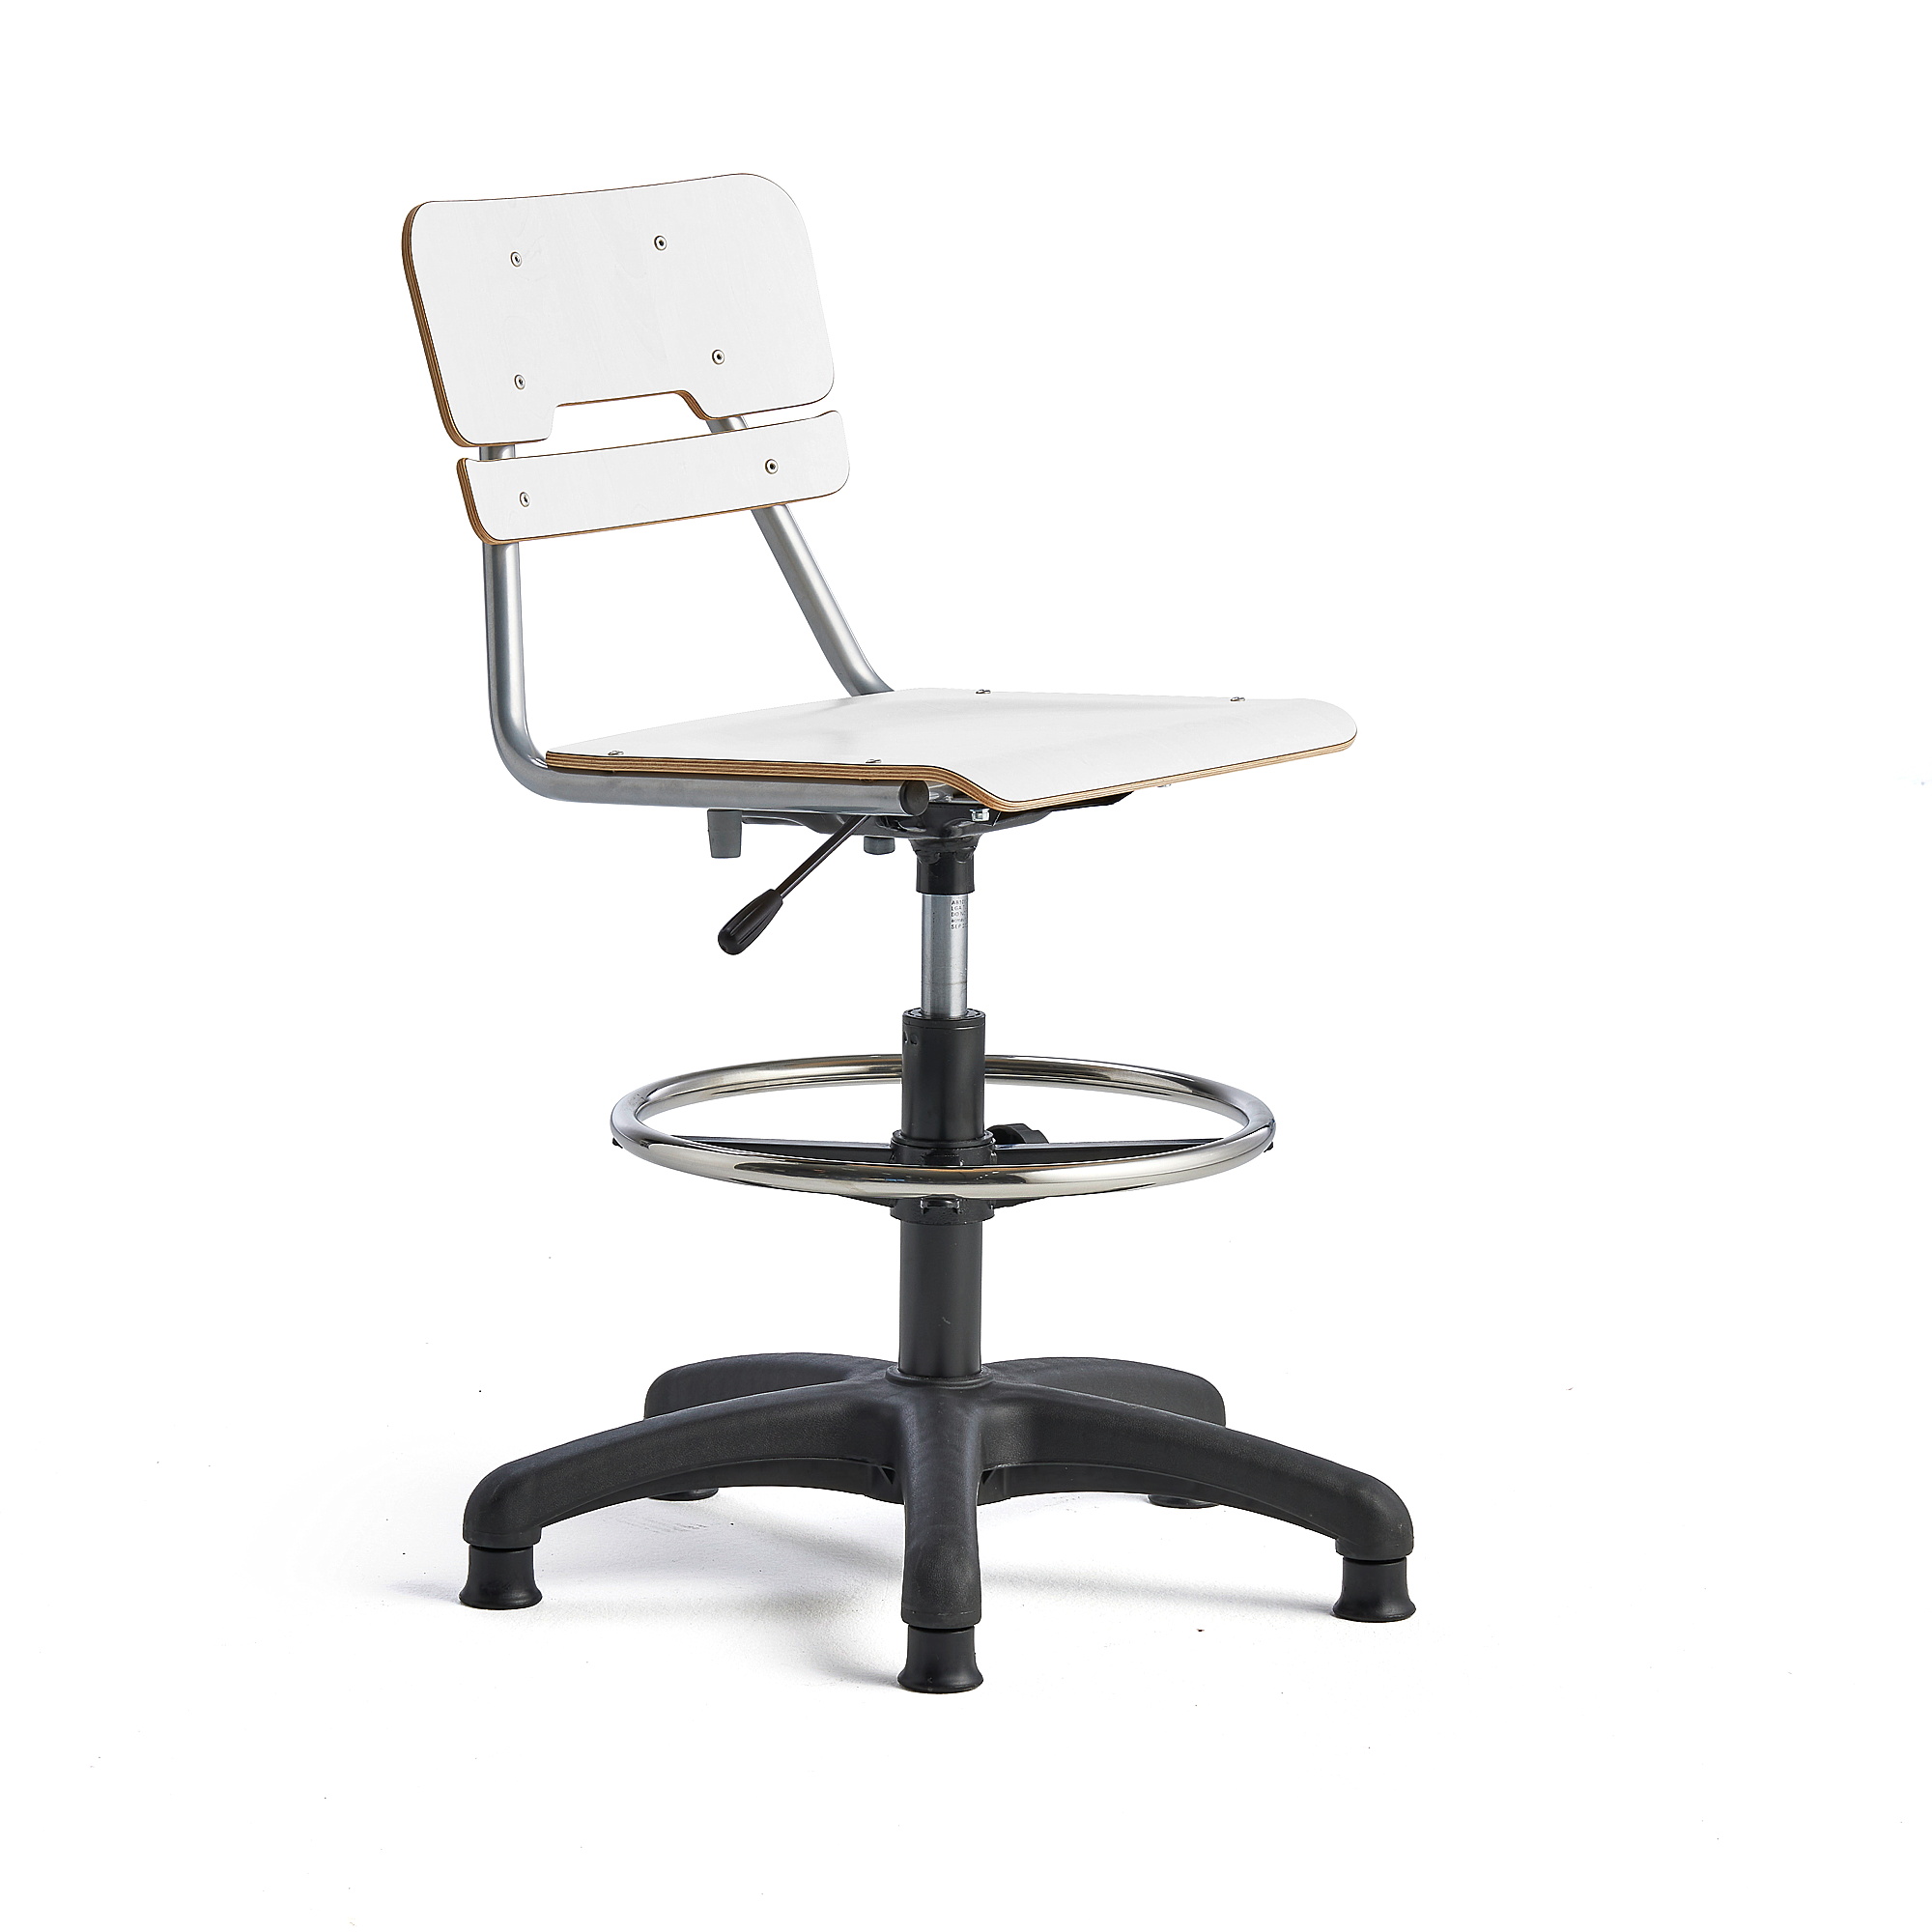 Otočná židle LEGERE, malý sedák, s kluzáky, nastavitelná výška 500-690 mm, bílá